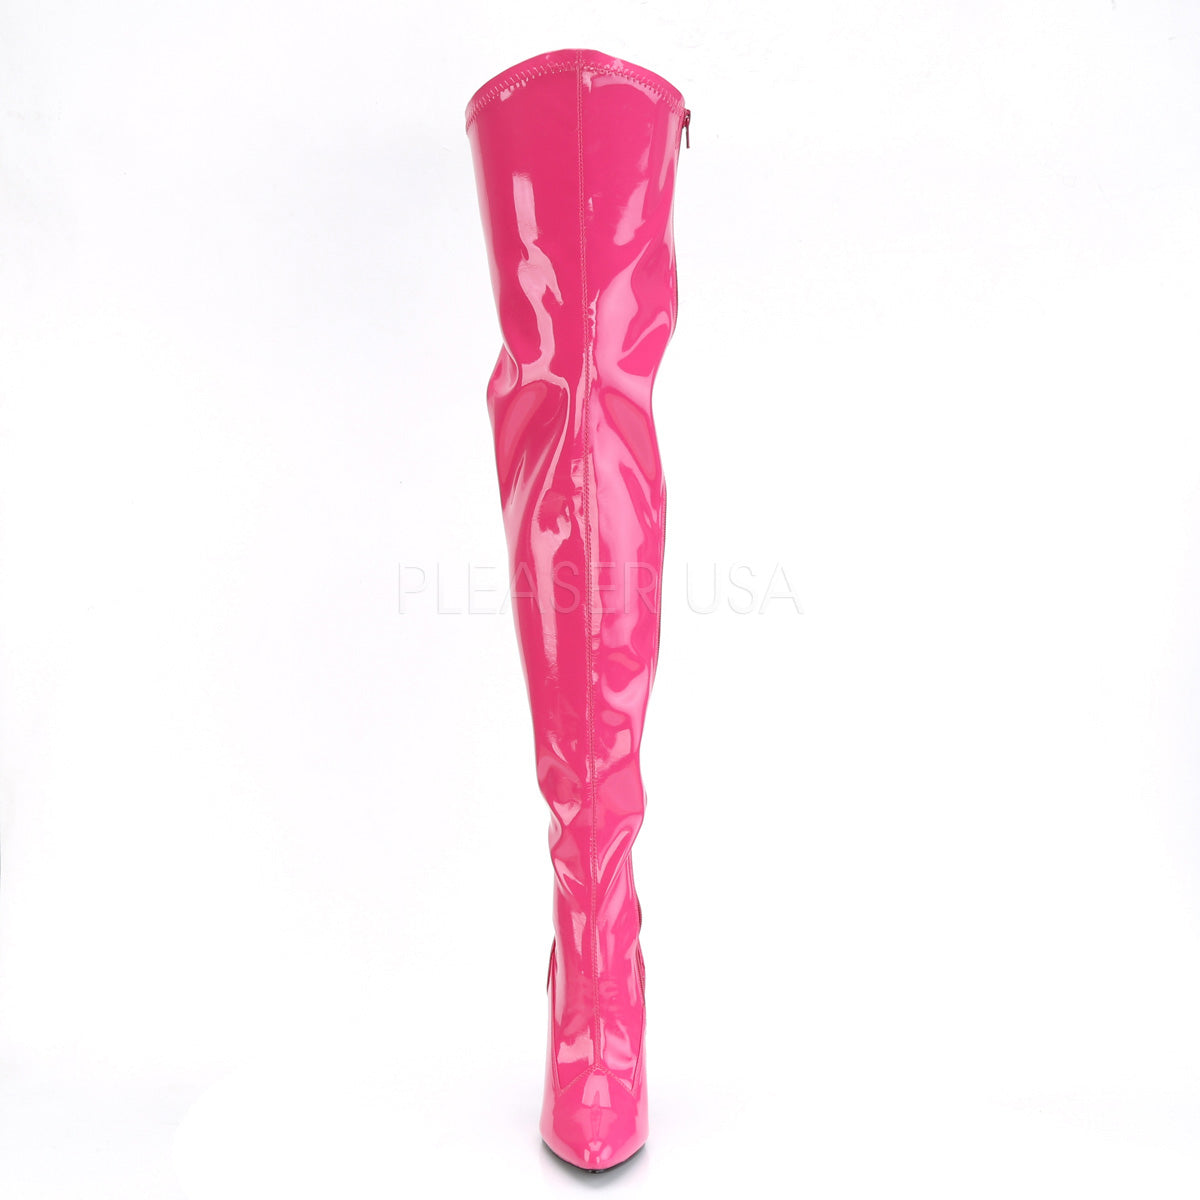 5 Inch Heel SEDUCE-3000 Hot Pink